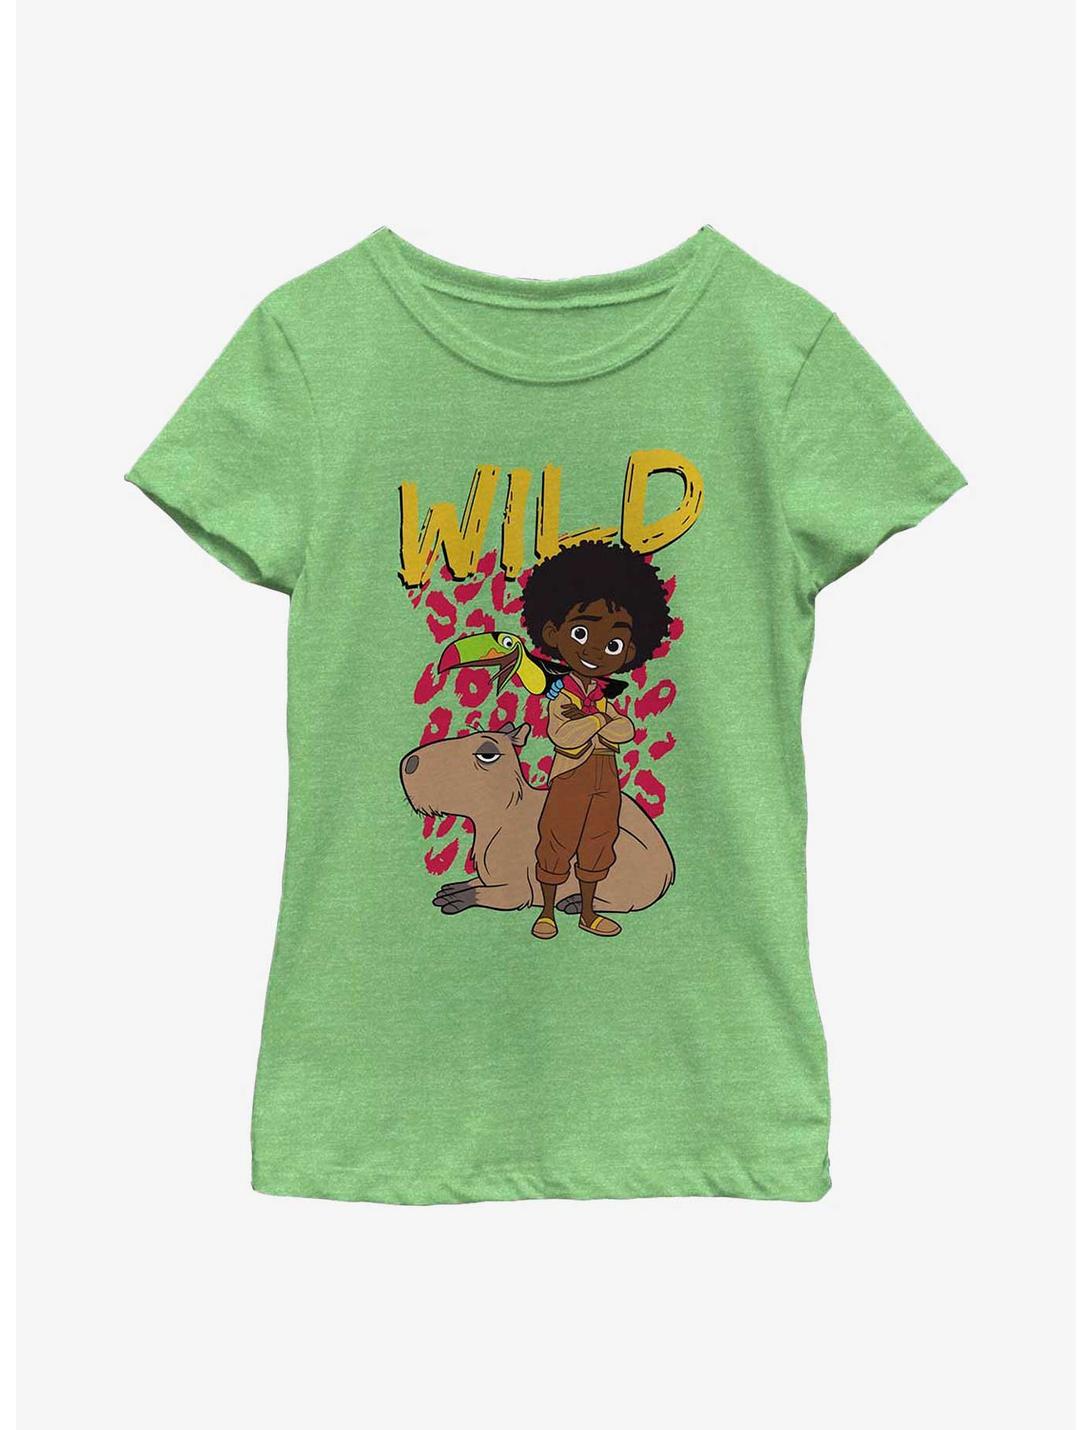 Disney Encanto Wild Child Youth Girls T-Shirt, GRN APPLE, hi-res